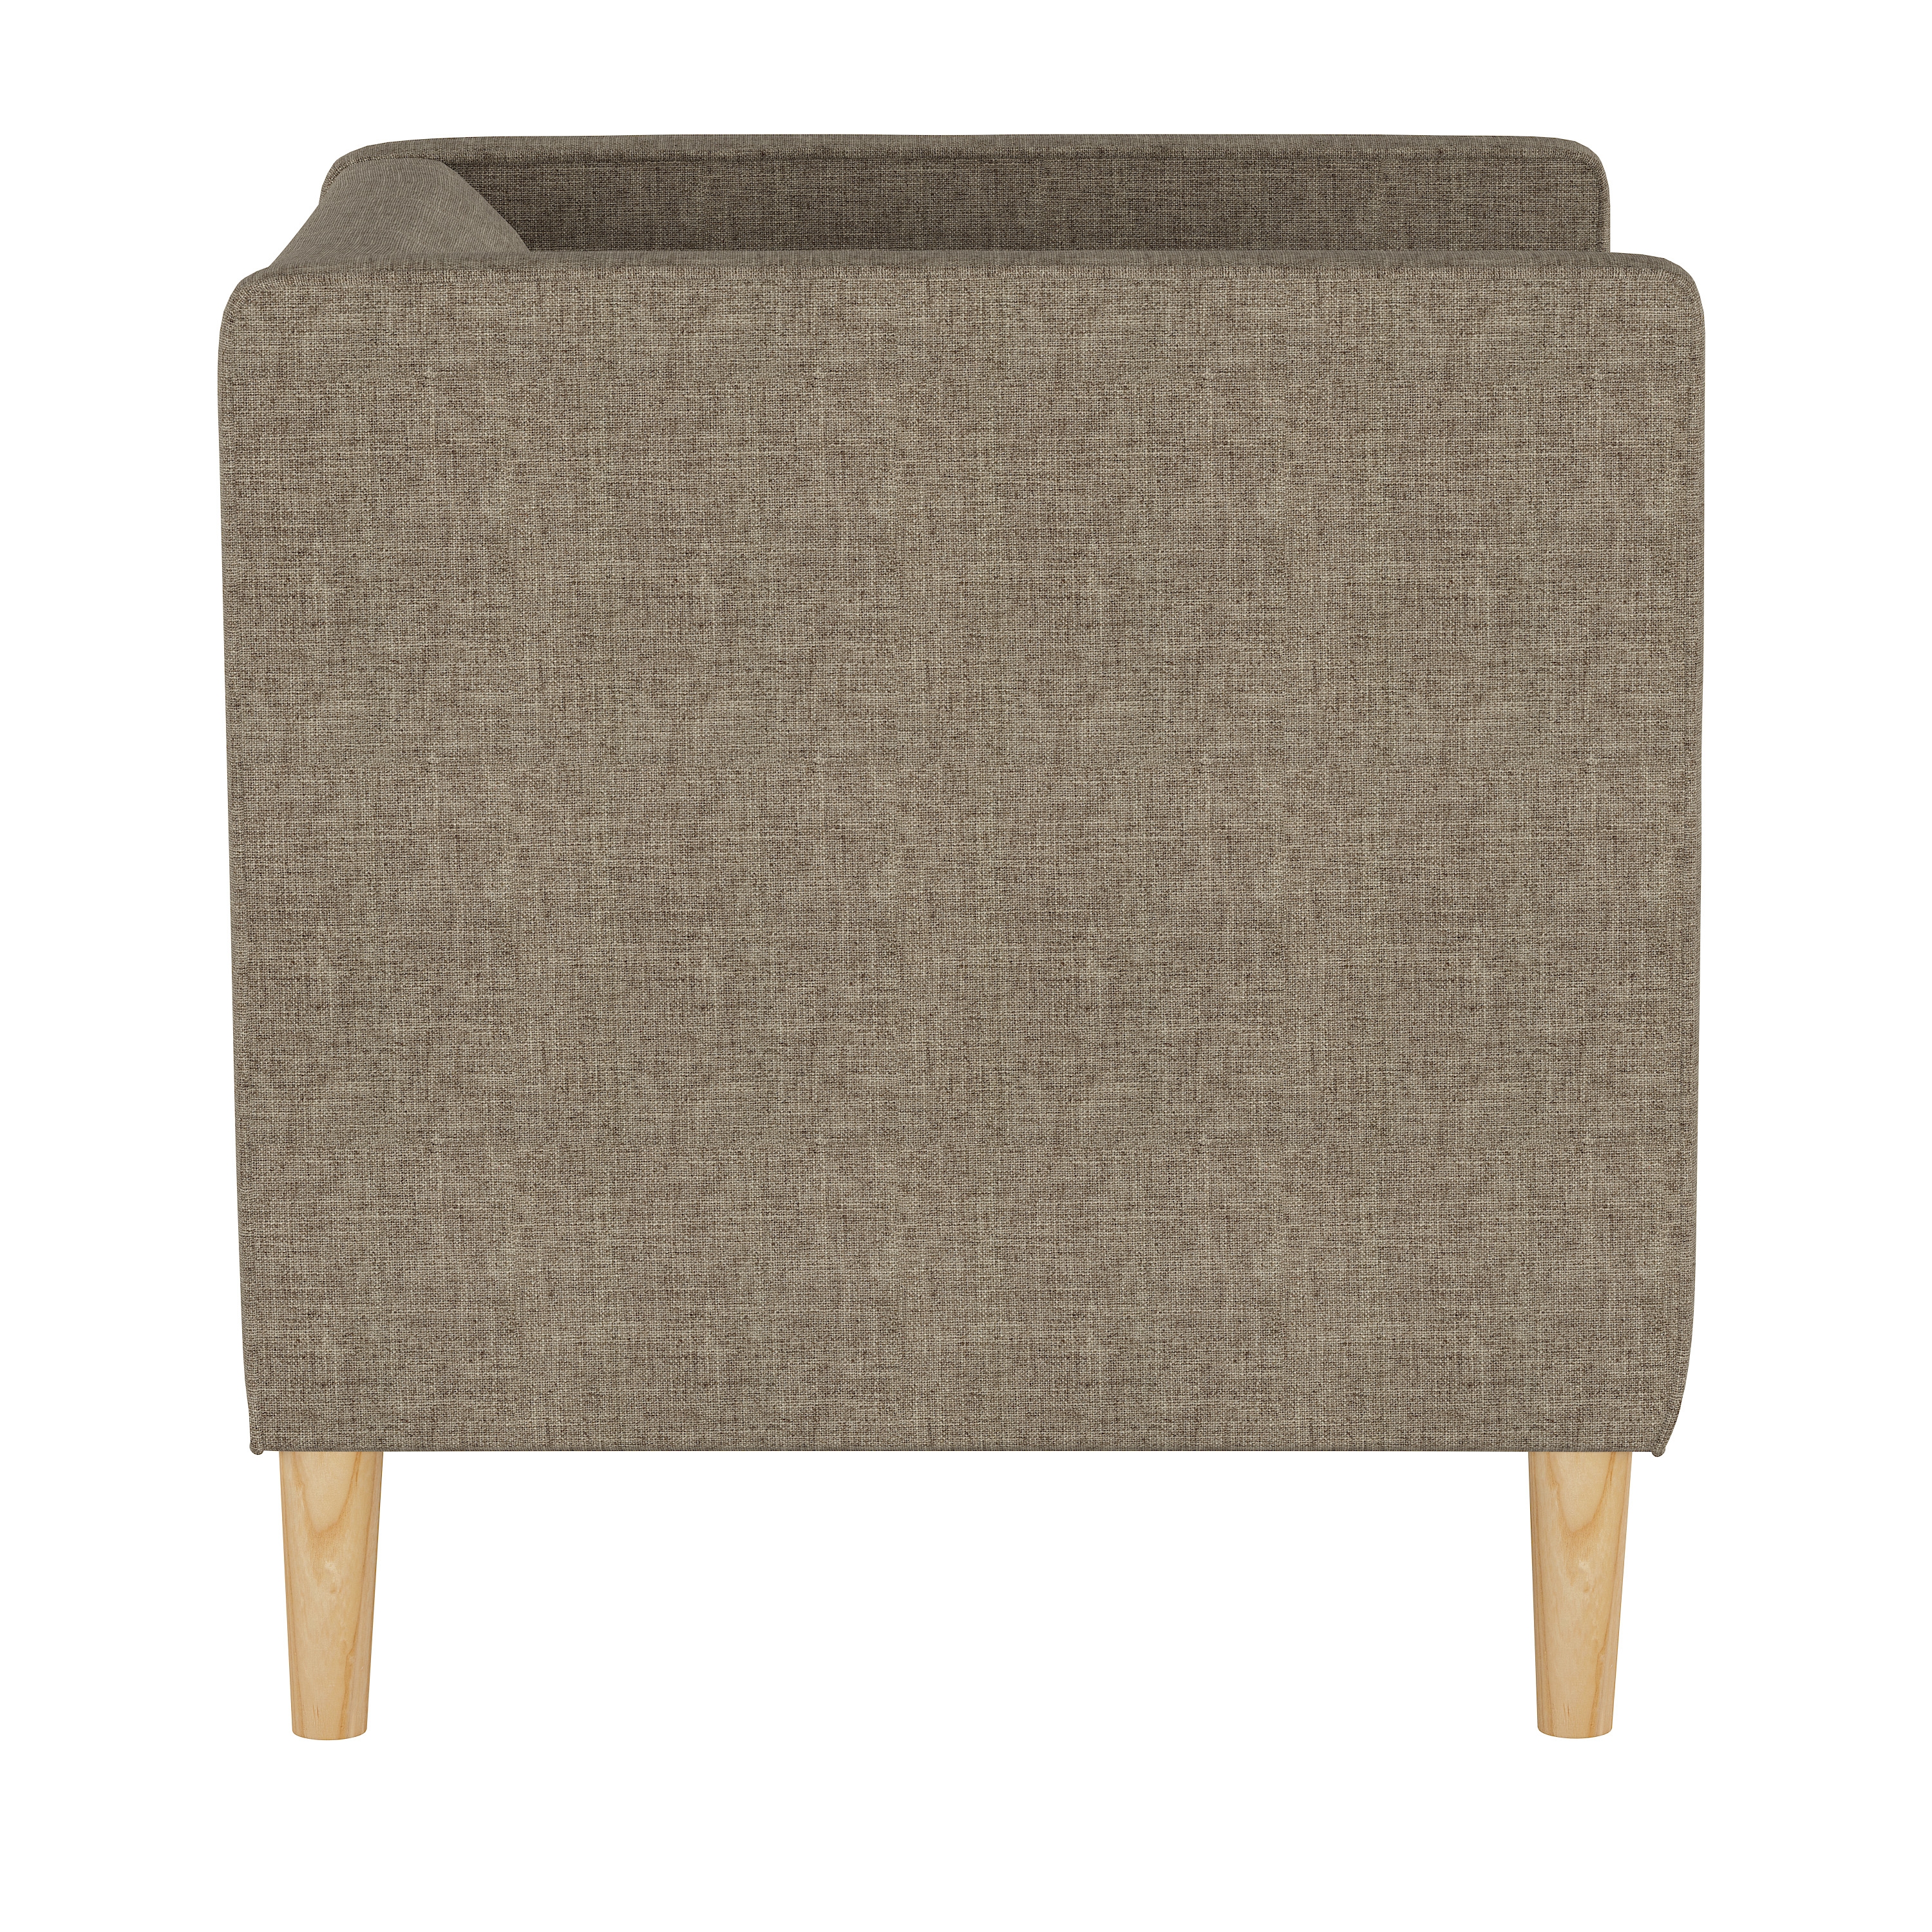 Humboldt Chair, Linen - Image 2